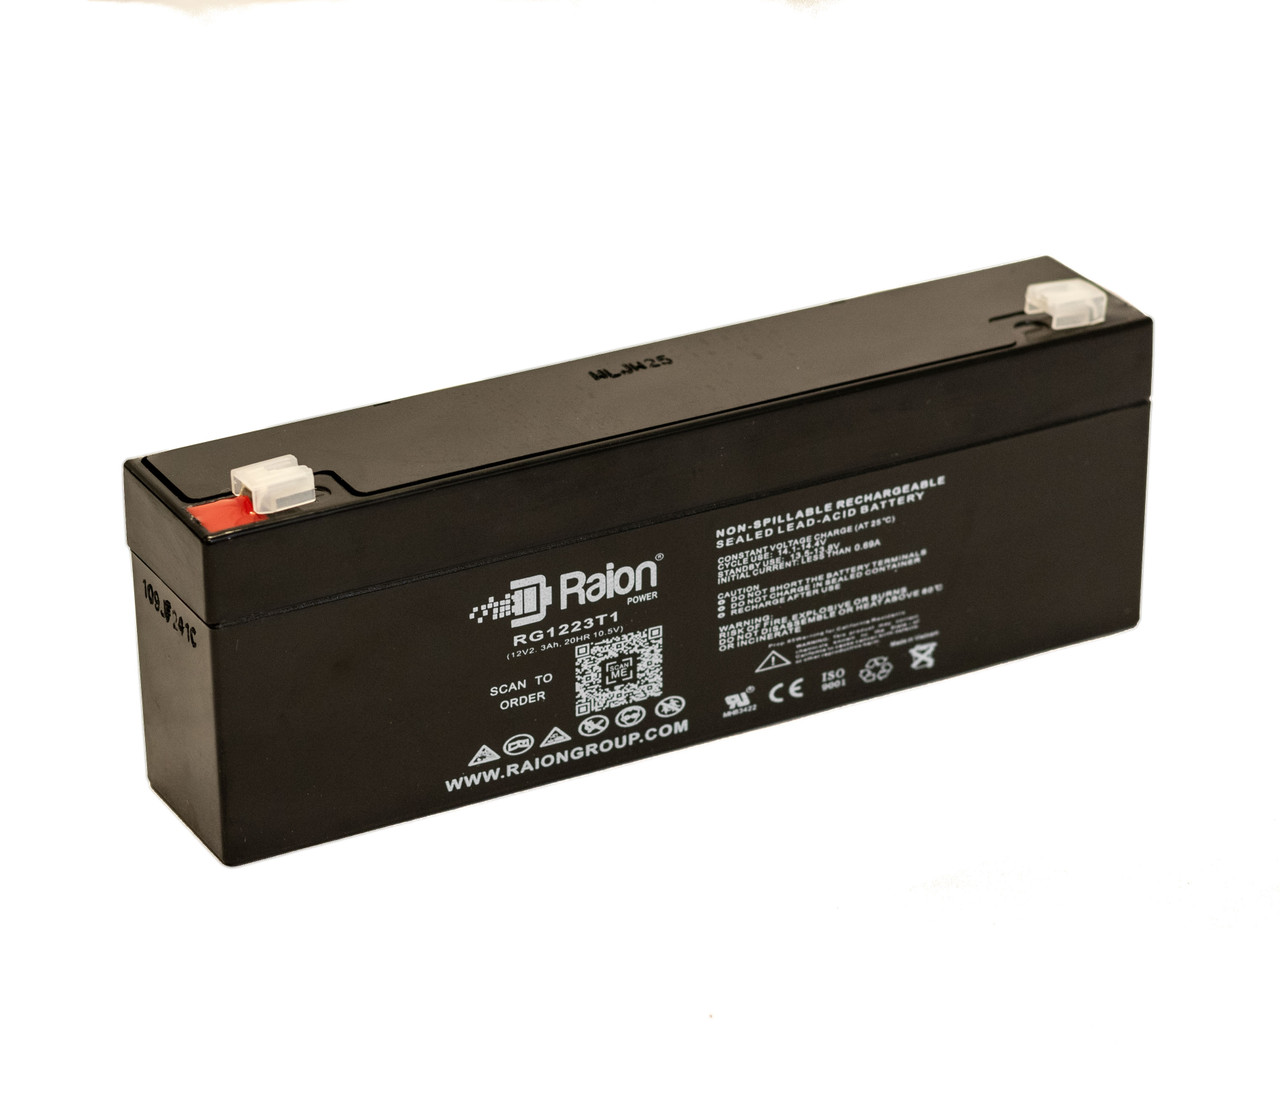 Raion Power RG1223T1 Replacement Battery for Birtcher 320 Defibrillator